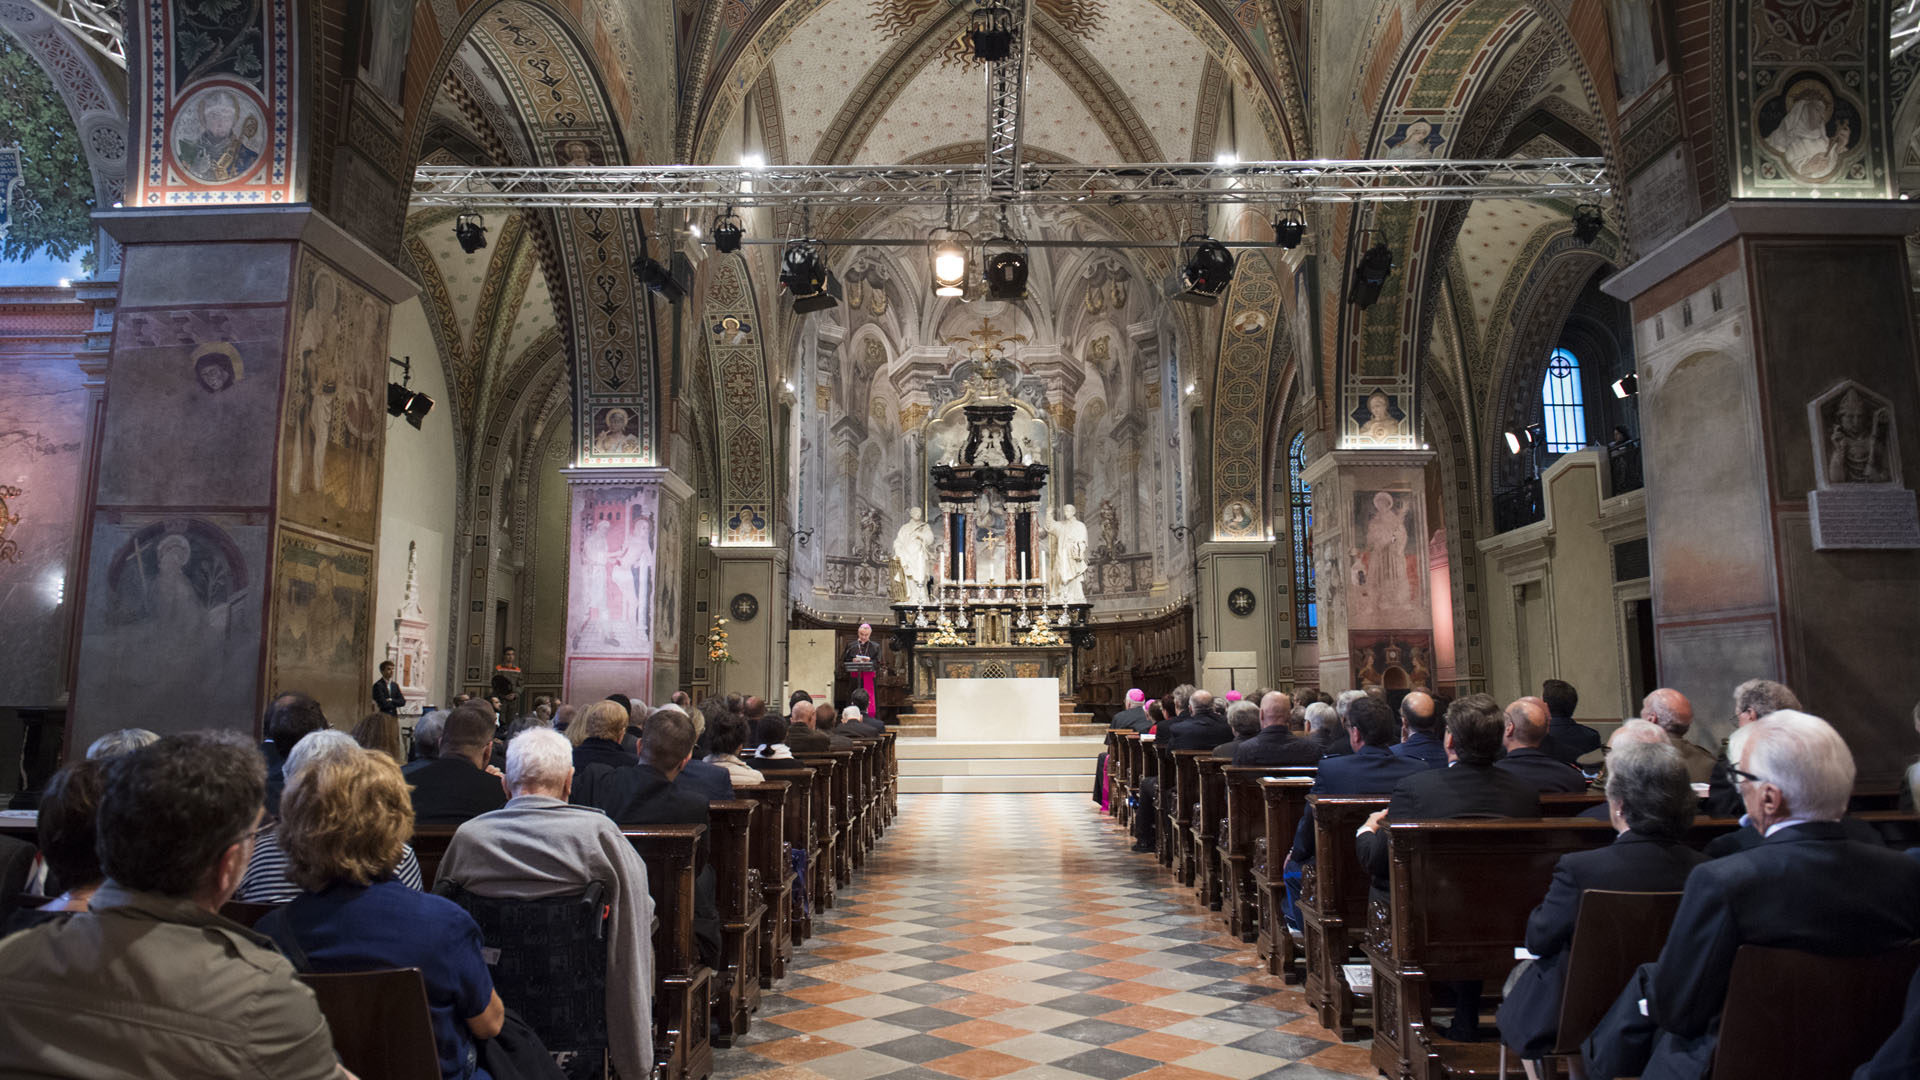 Lugano le 13 octobre 2017. Mgr Lazzeri, évêque de Lugano, a inauguré la cathédrale San Lorenzo de Lugano. | © Diocèse de Lugano 